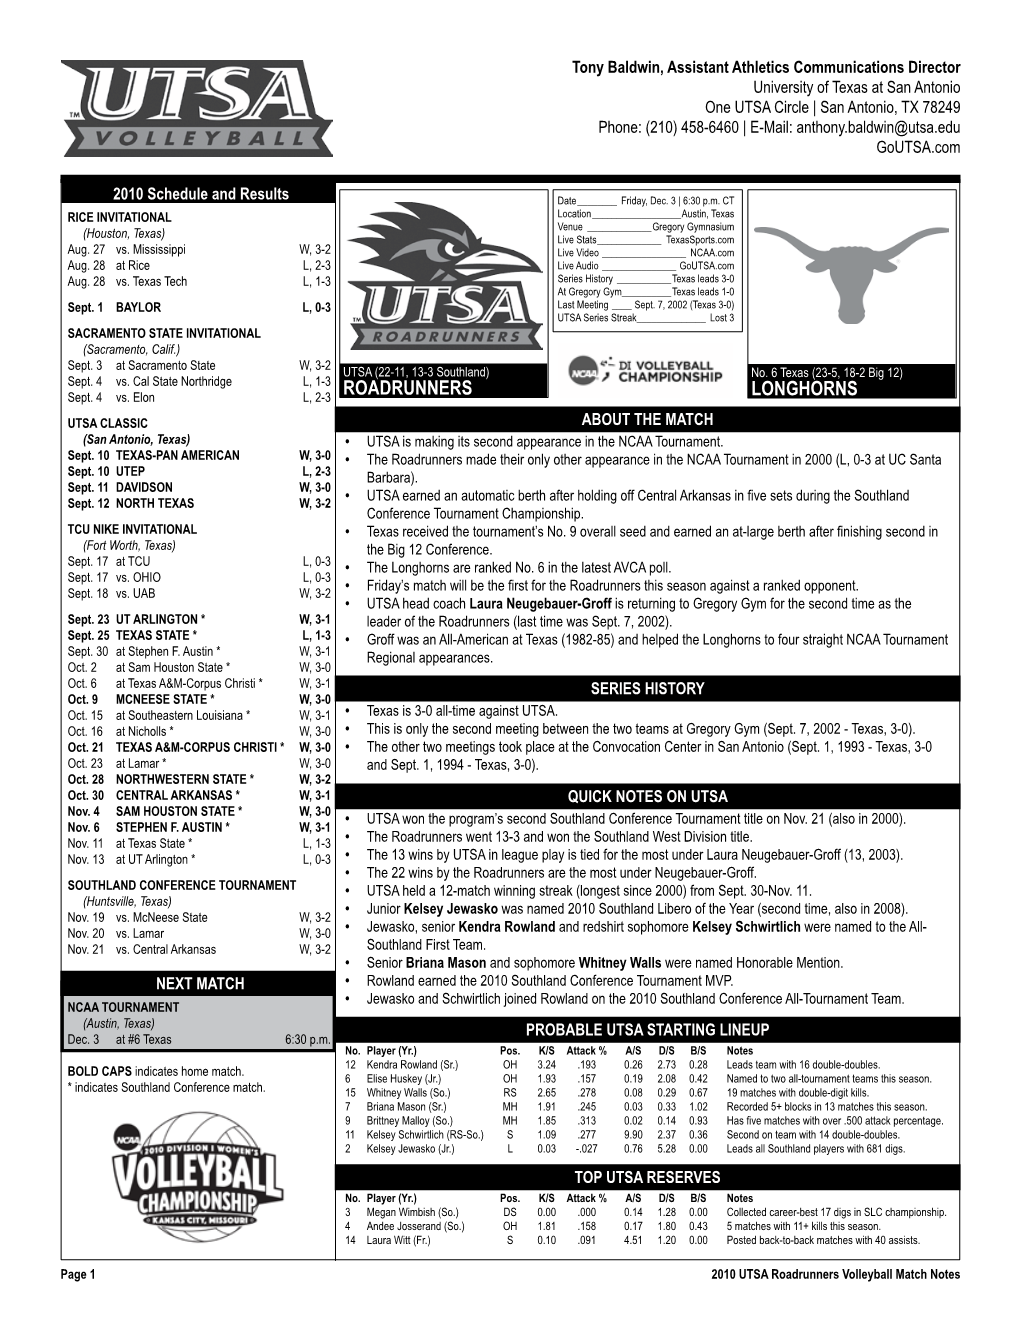 Read the UTSA Dec. 3 Volleyball Match Notes